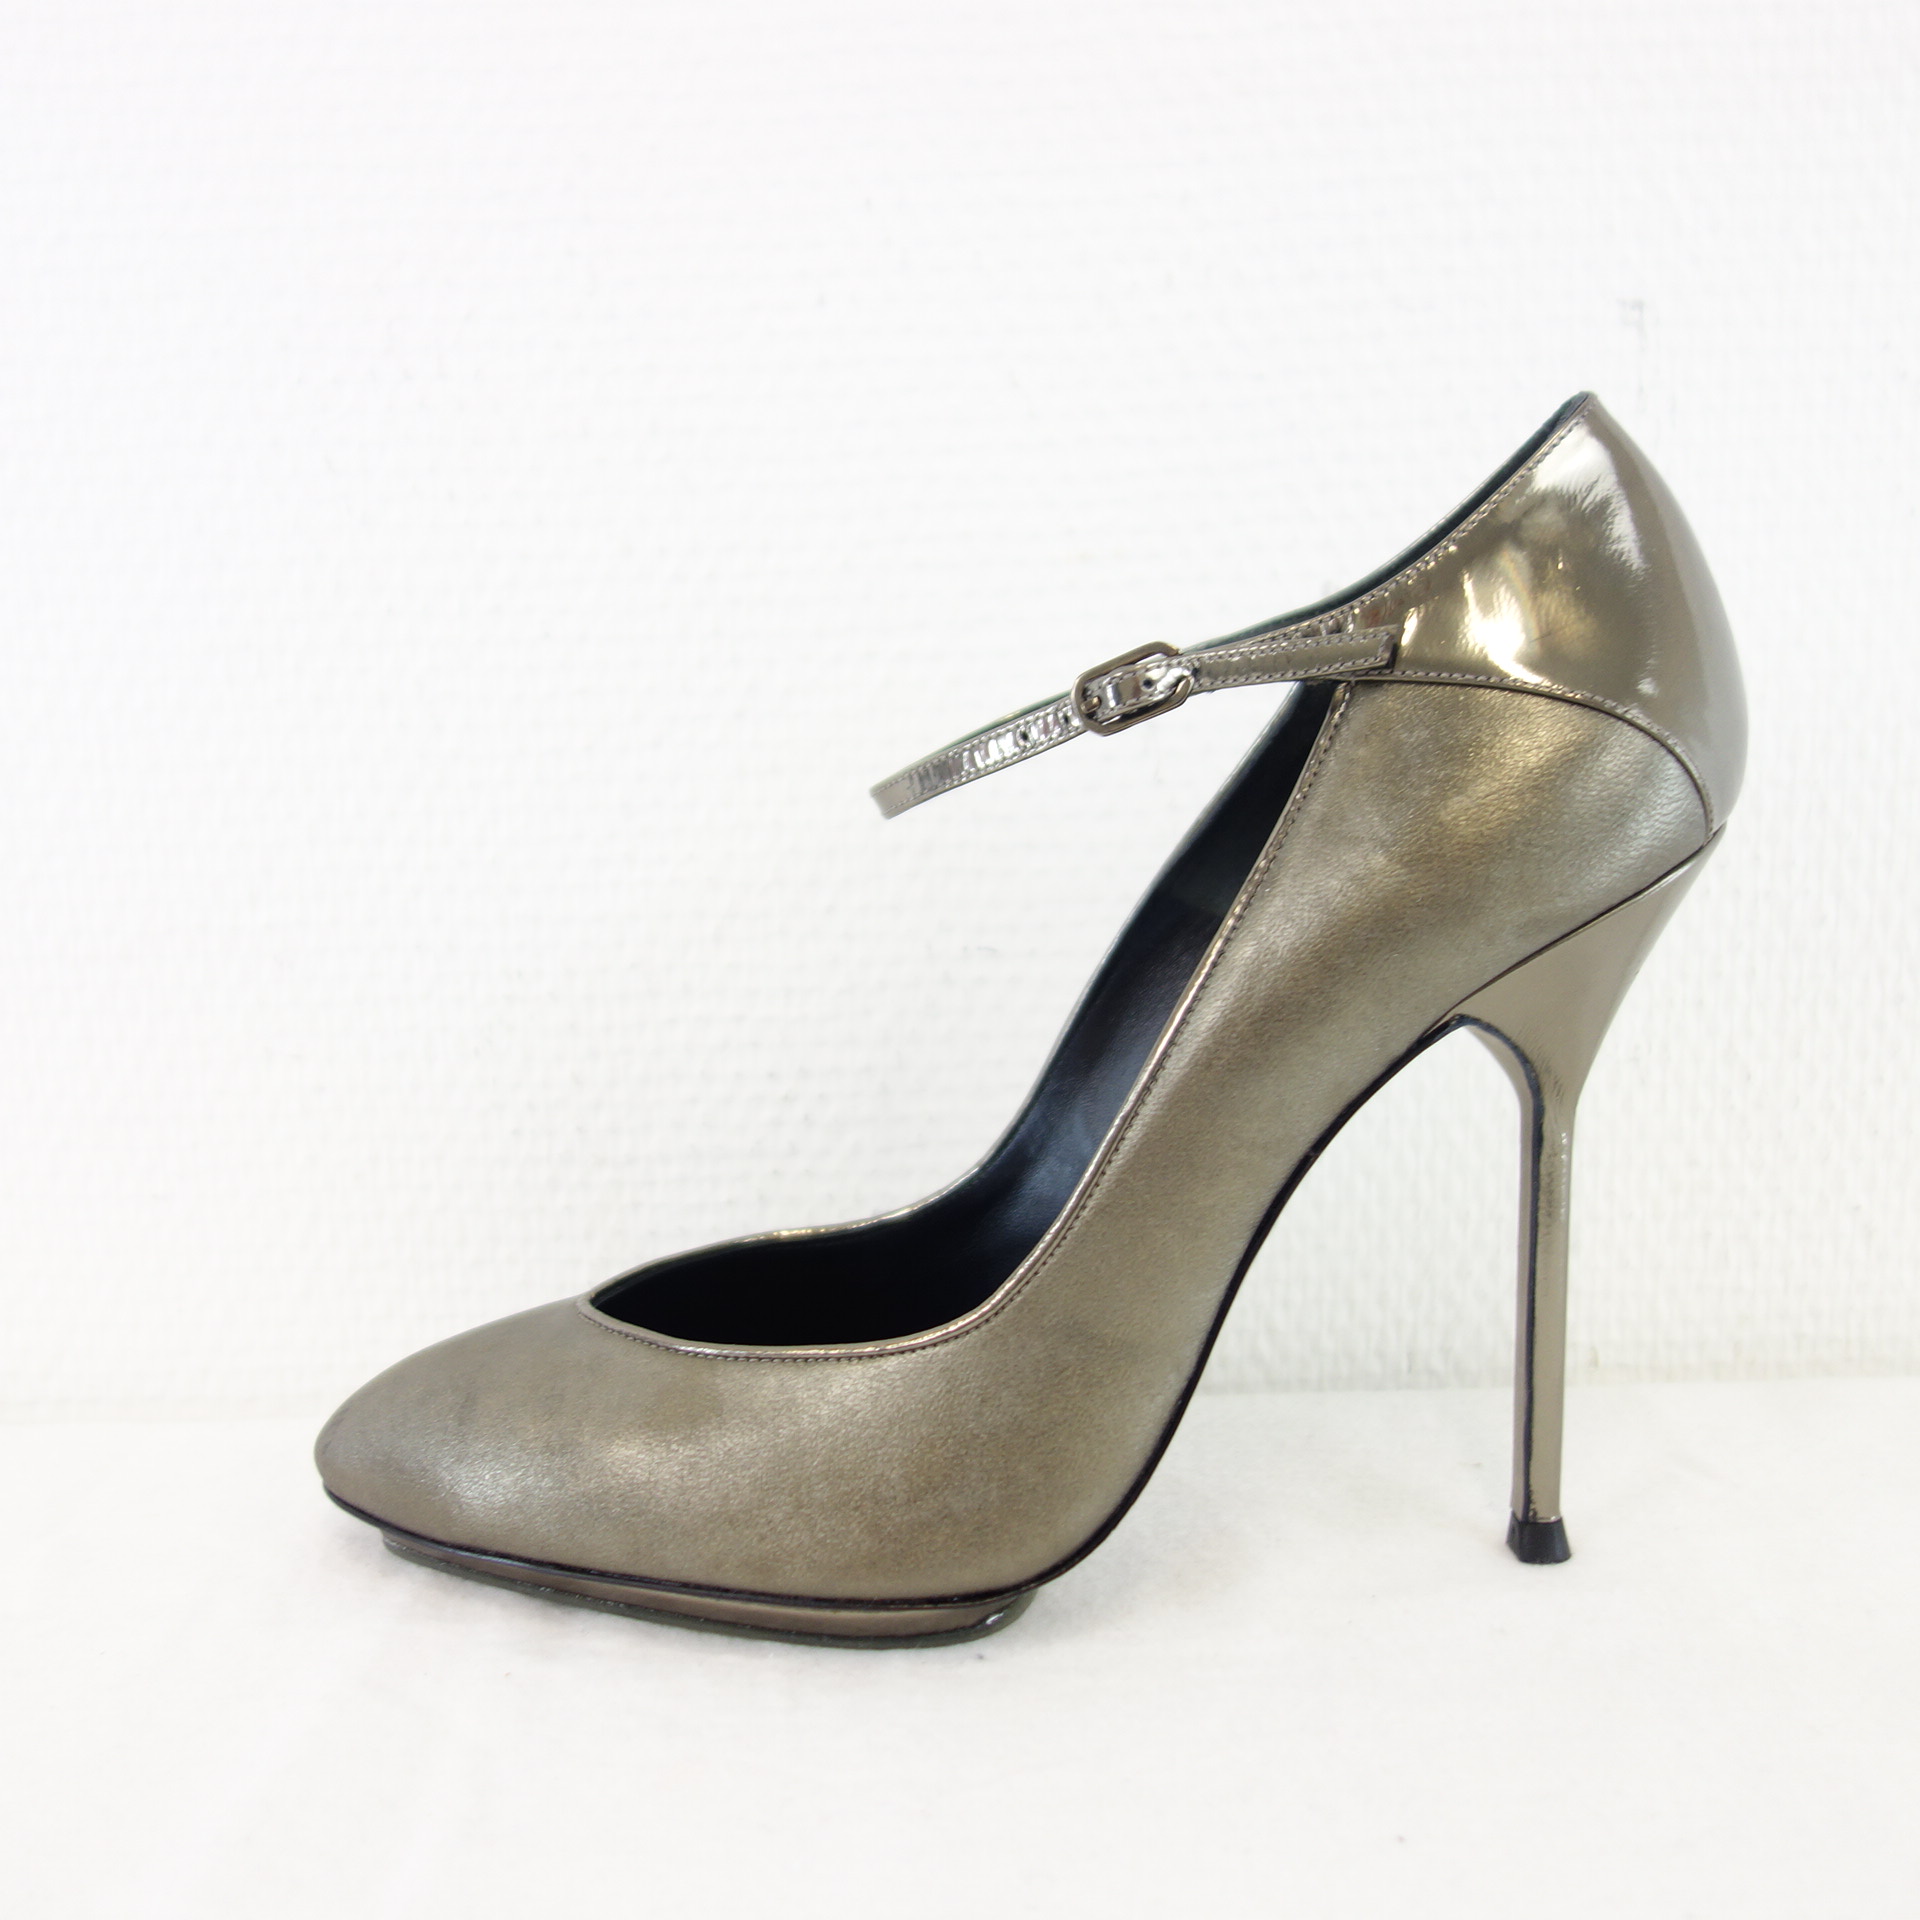 MAGRIT Damen Schuhe Pumps High Heels Stiletto Leder Anthrazit Metallic Gr 40